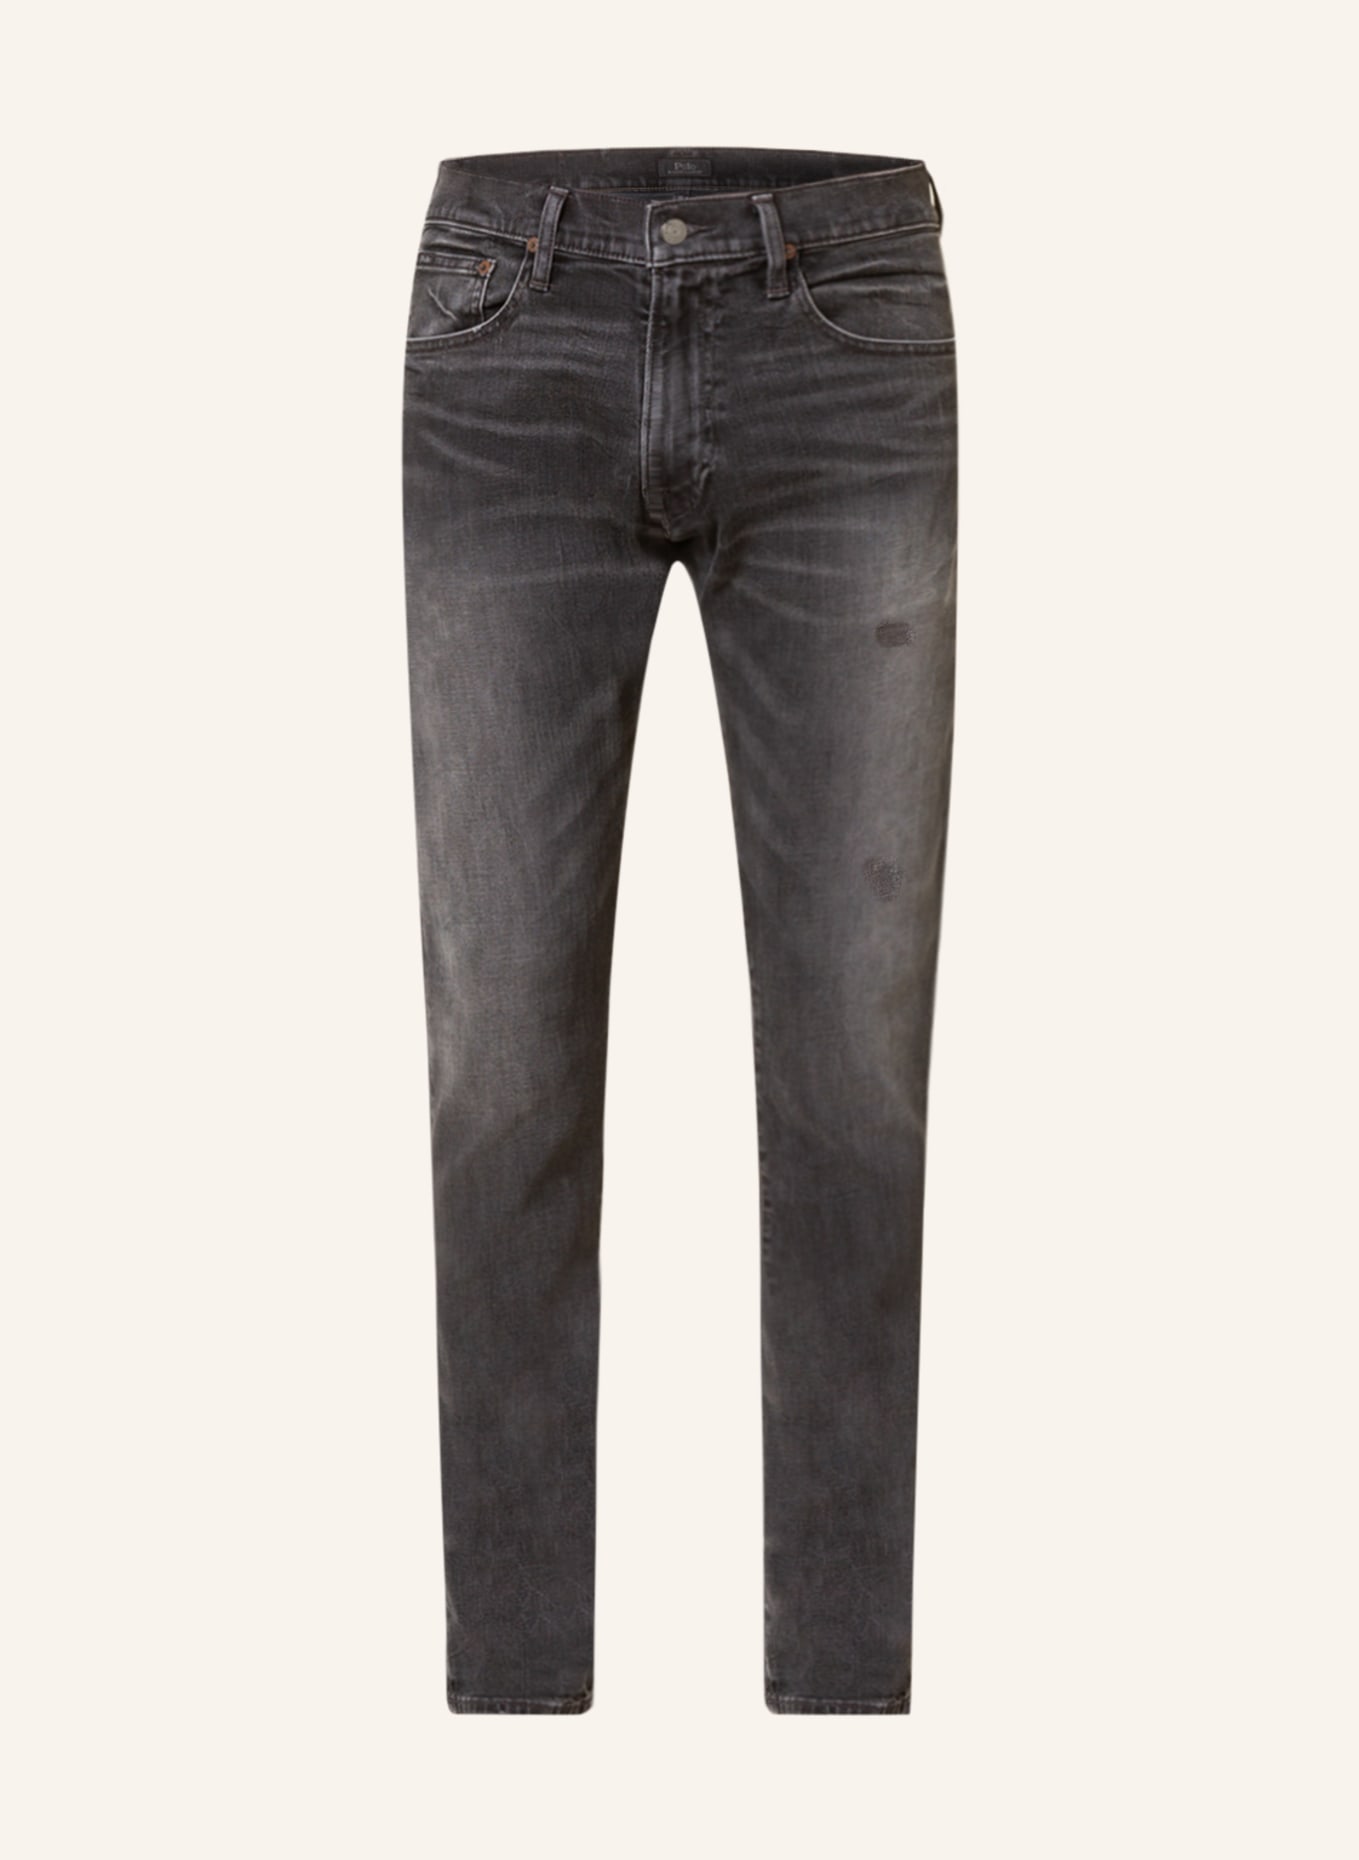 POLO RALPH LAUREN Jeans SULLIVAN Slim Fit, Farbe: 001 KELDERS (Bild 1)